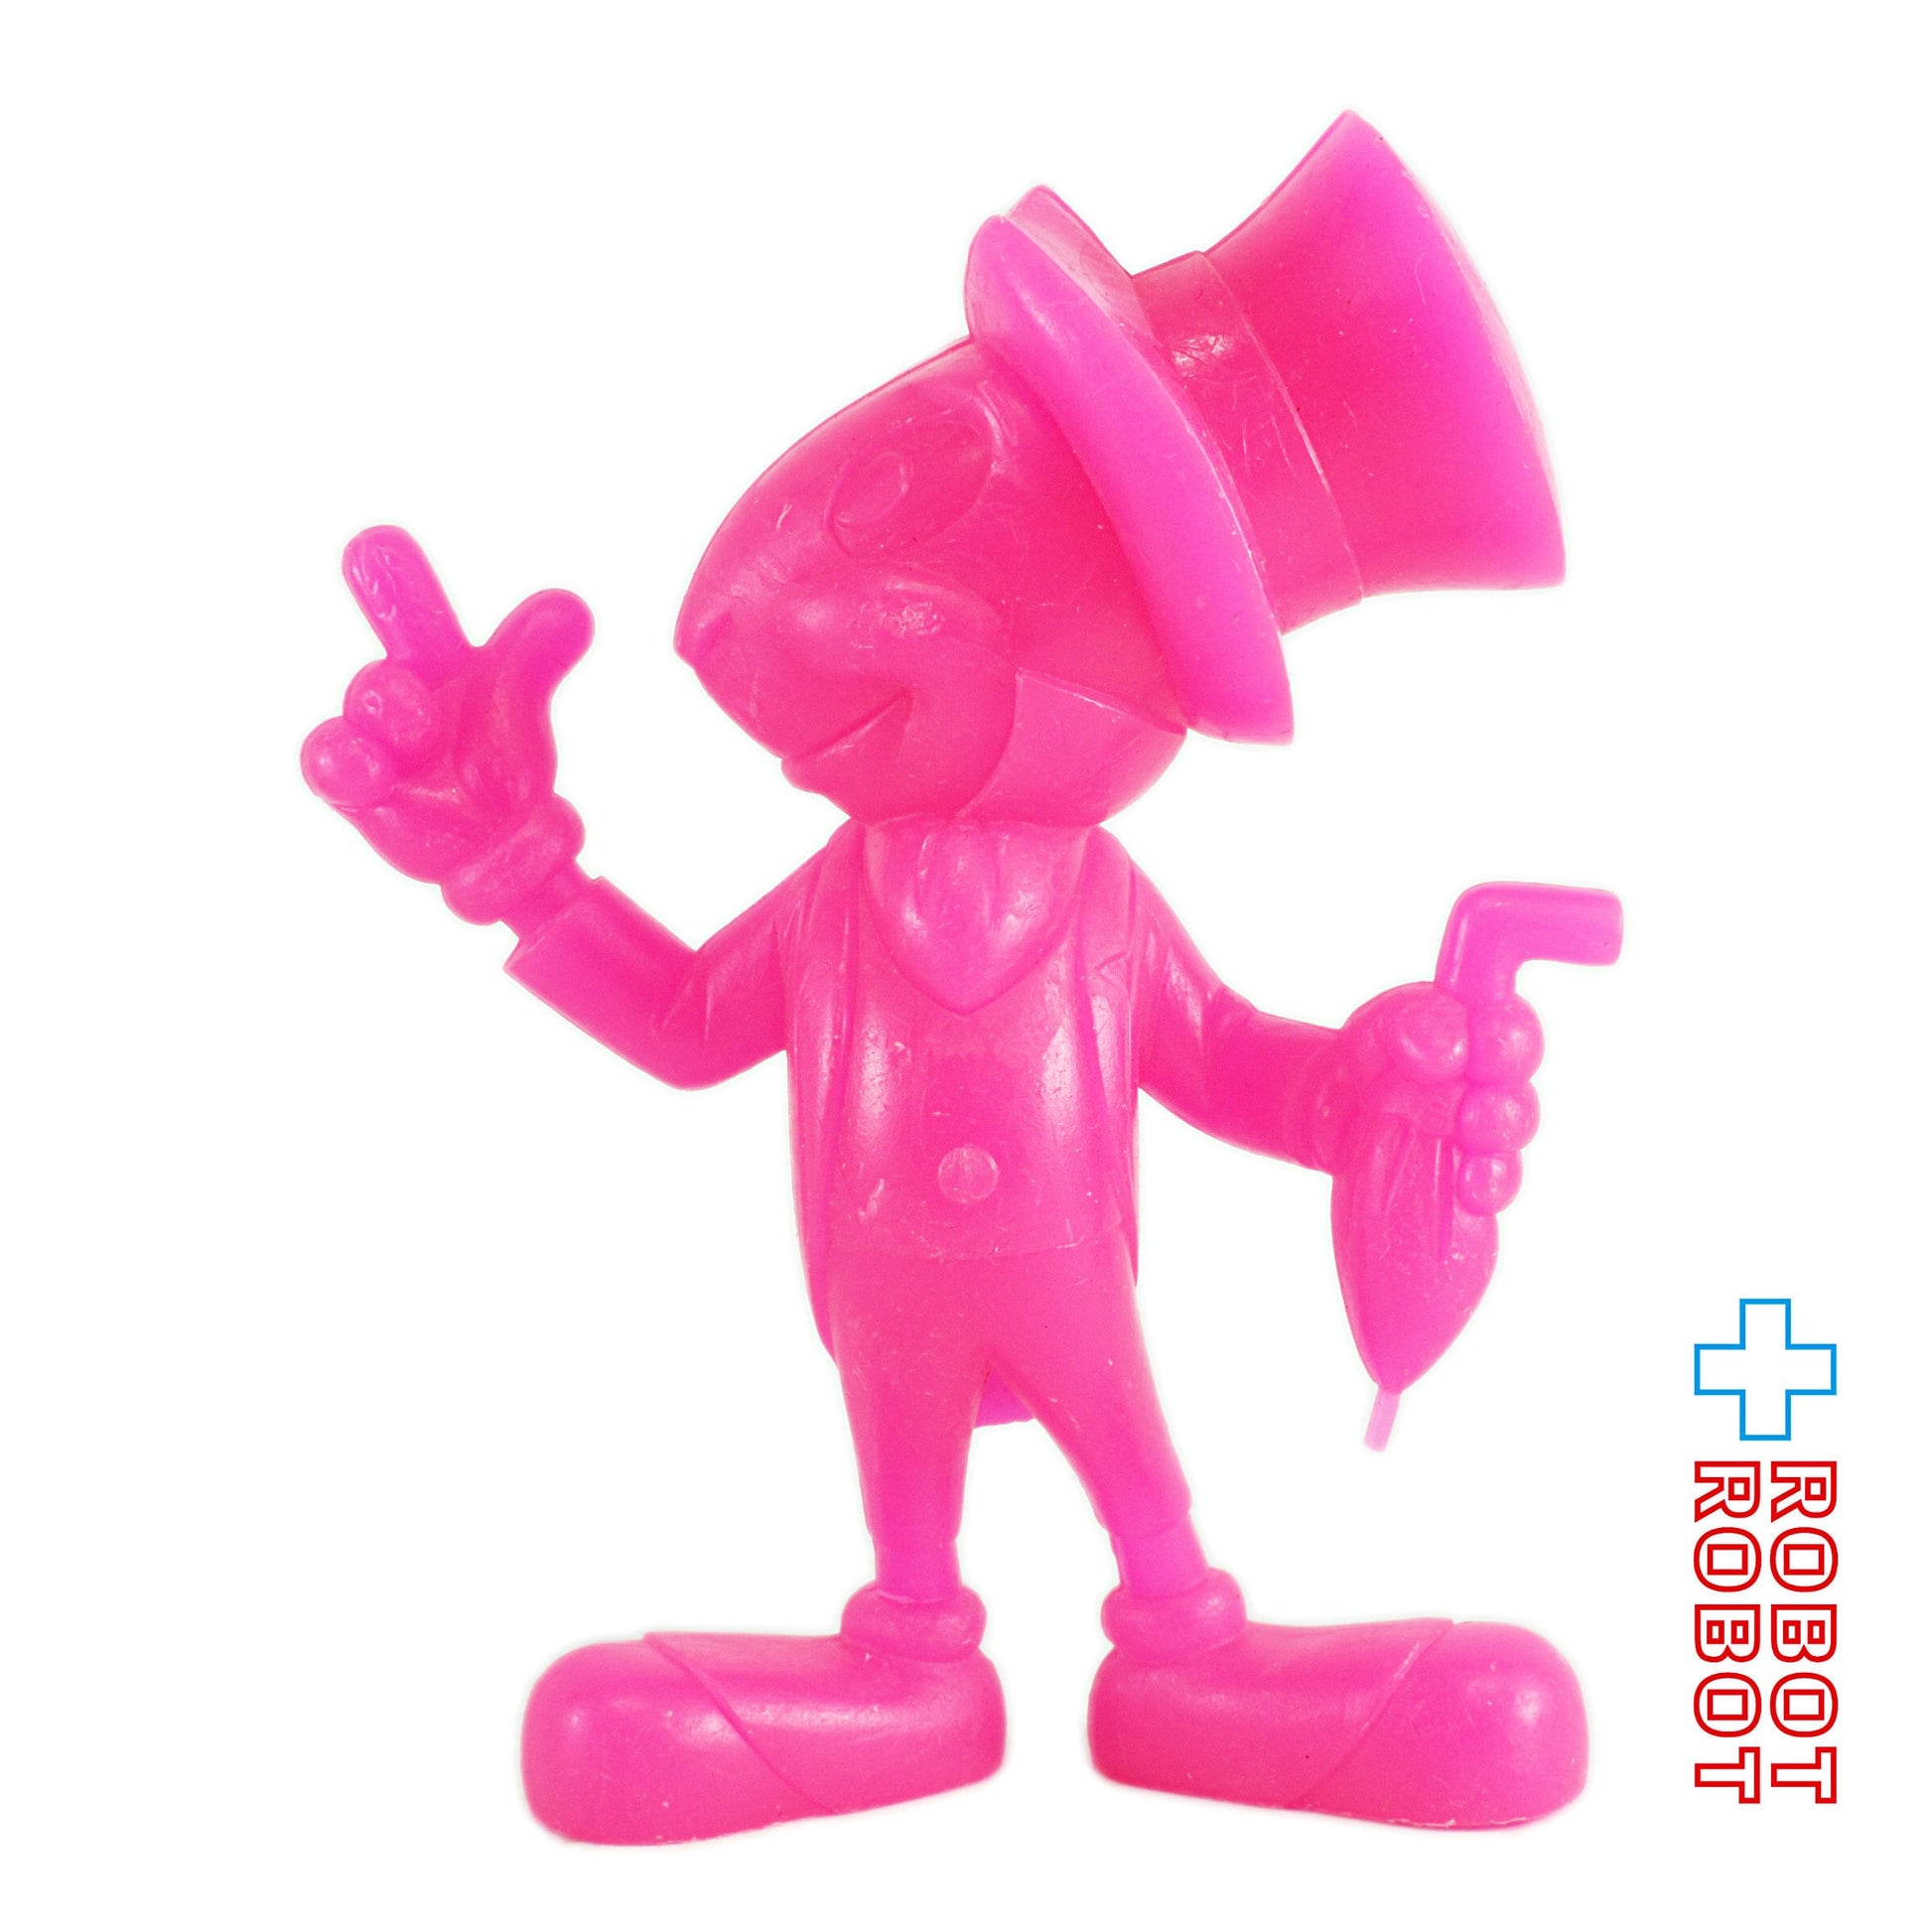 Marx ディズニー ジミニー・クリケット プラスチック フィギュア ピンク